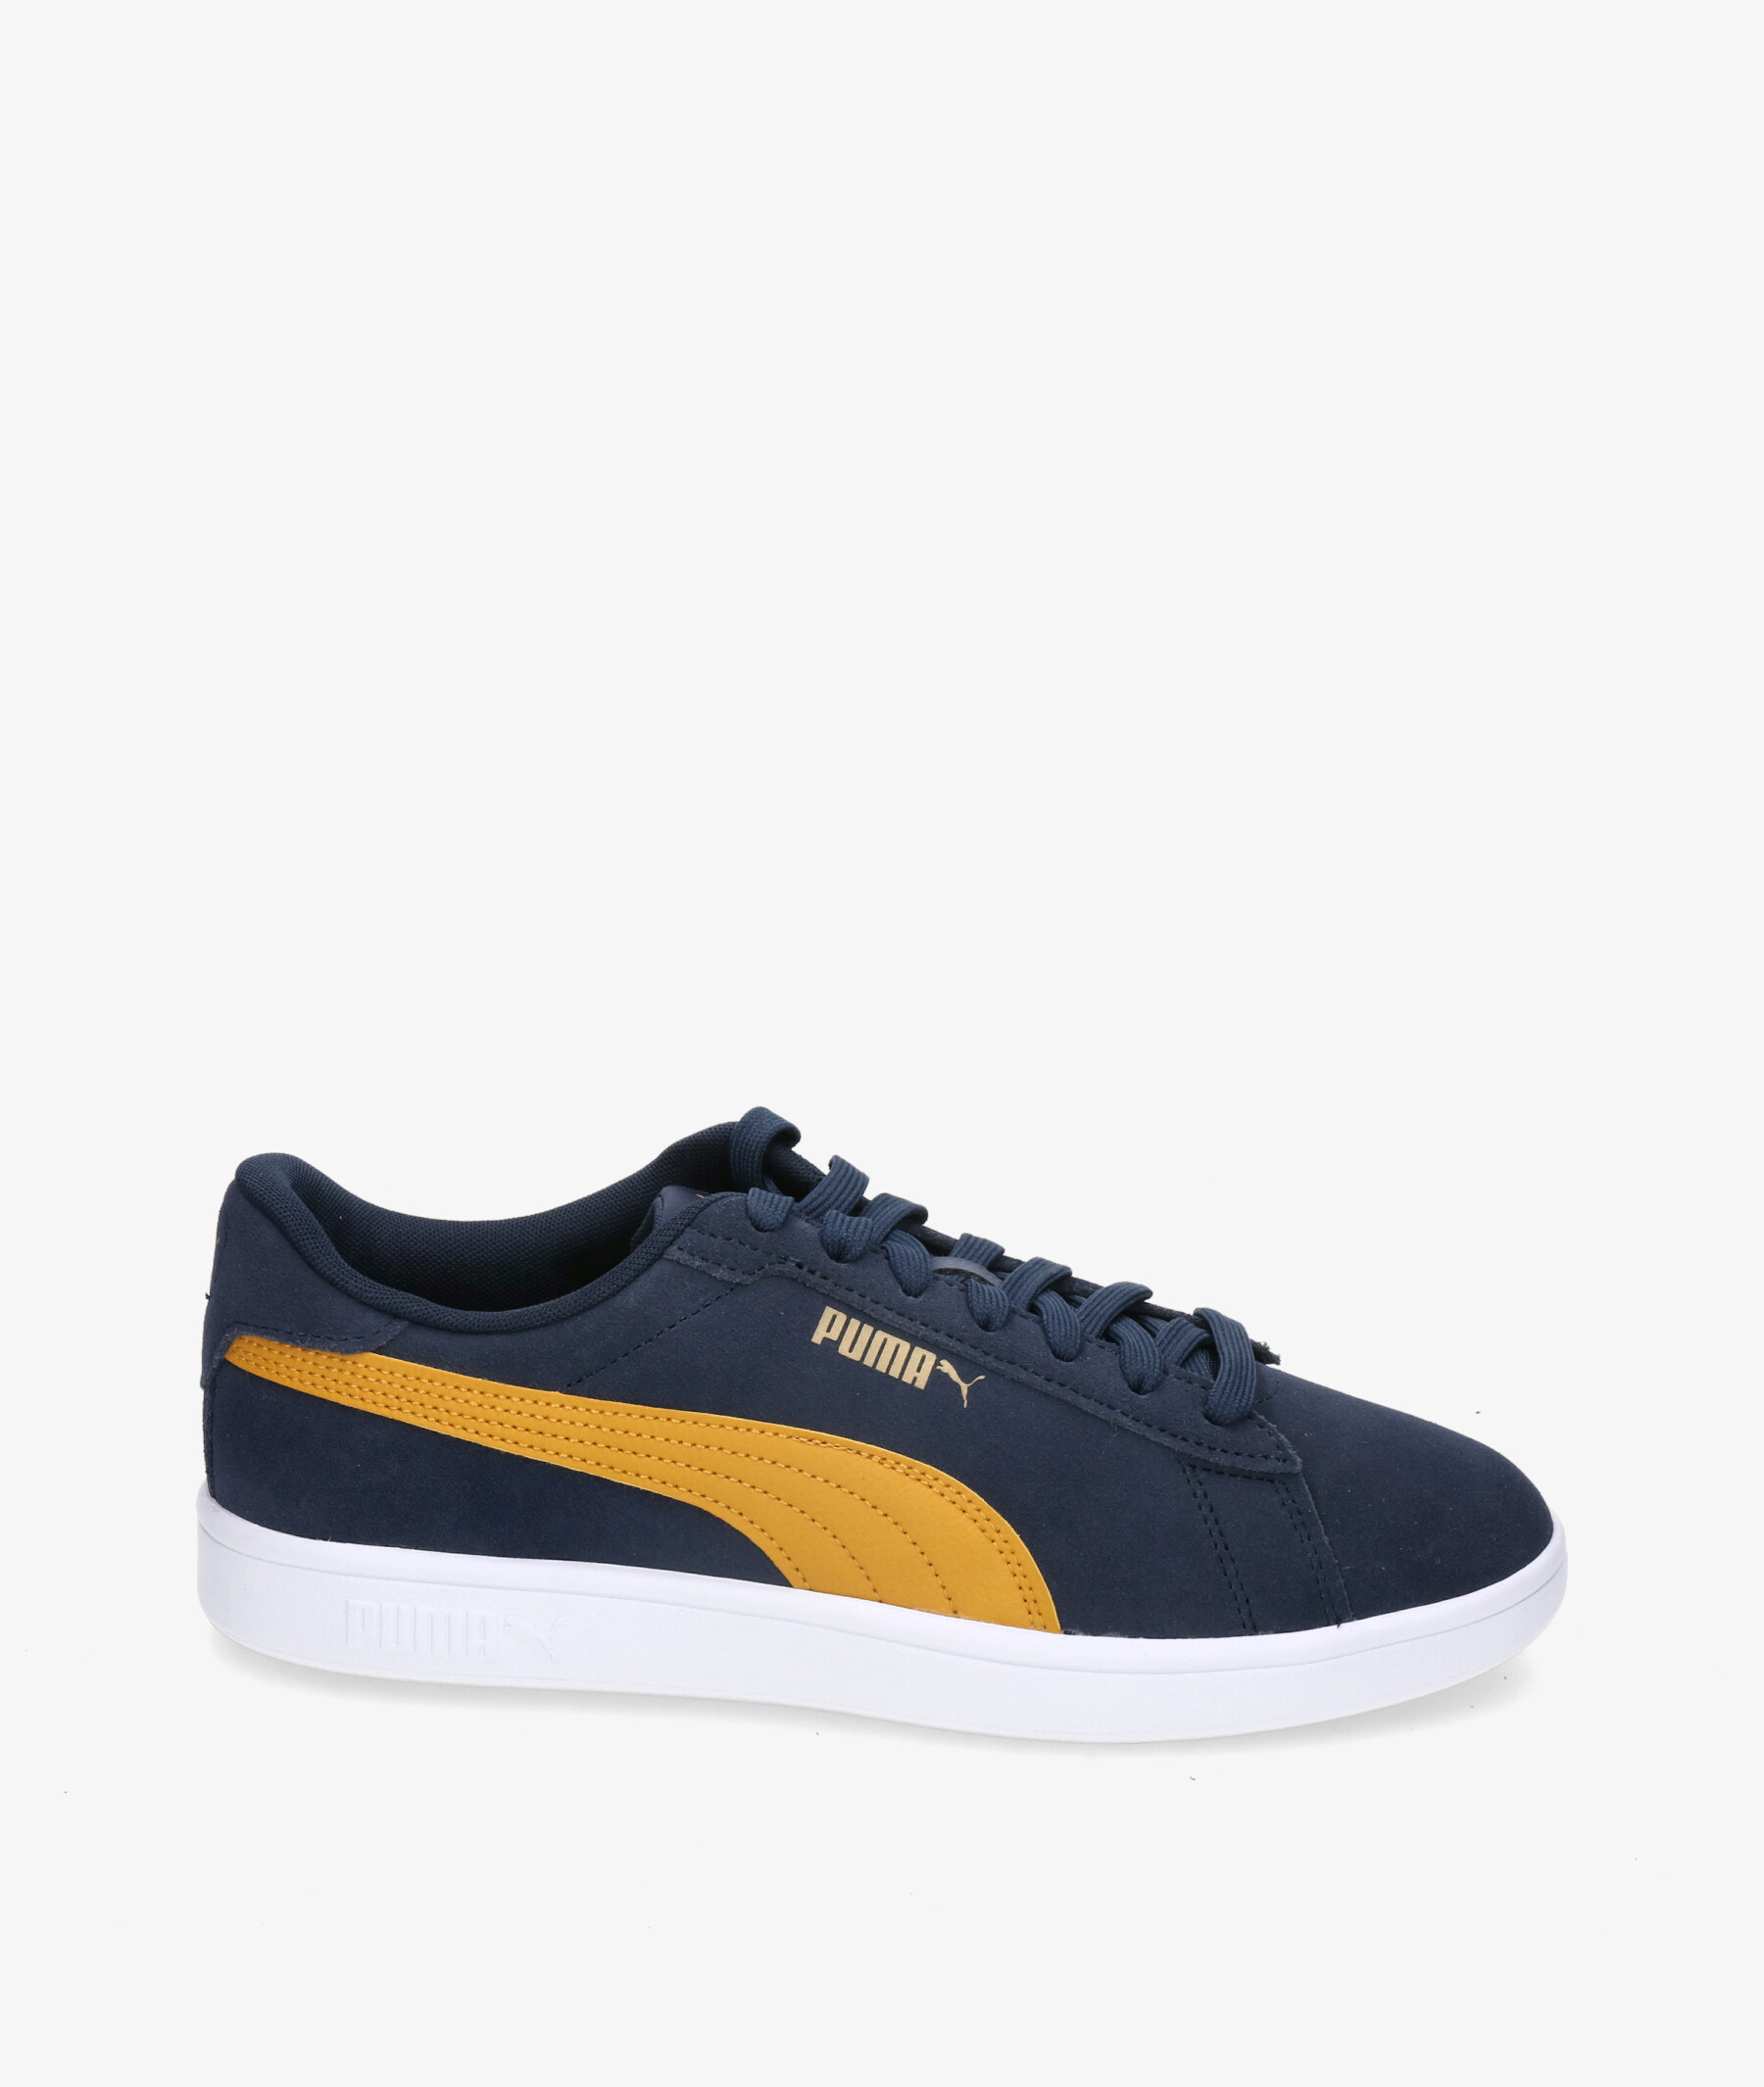 Puma Sneakers PUMA SMASH V3 in navy blue